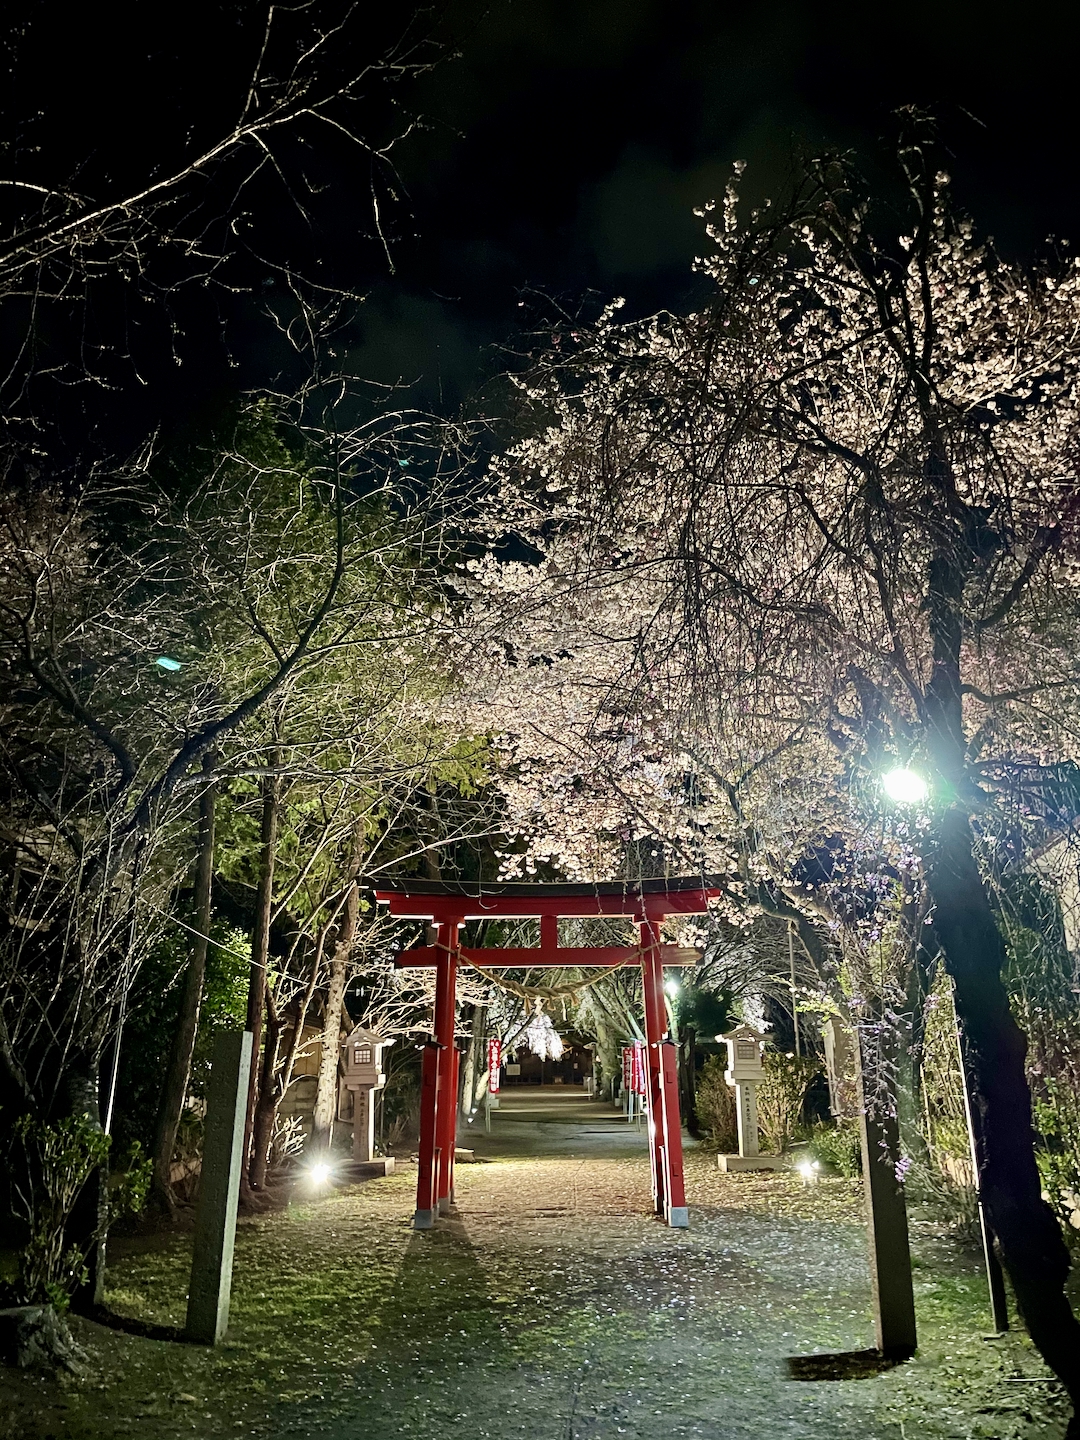 Mishima Hachiman shrine